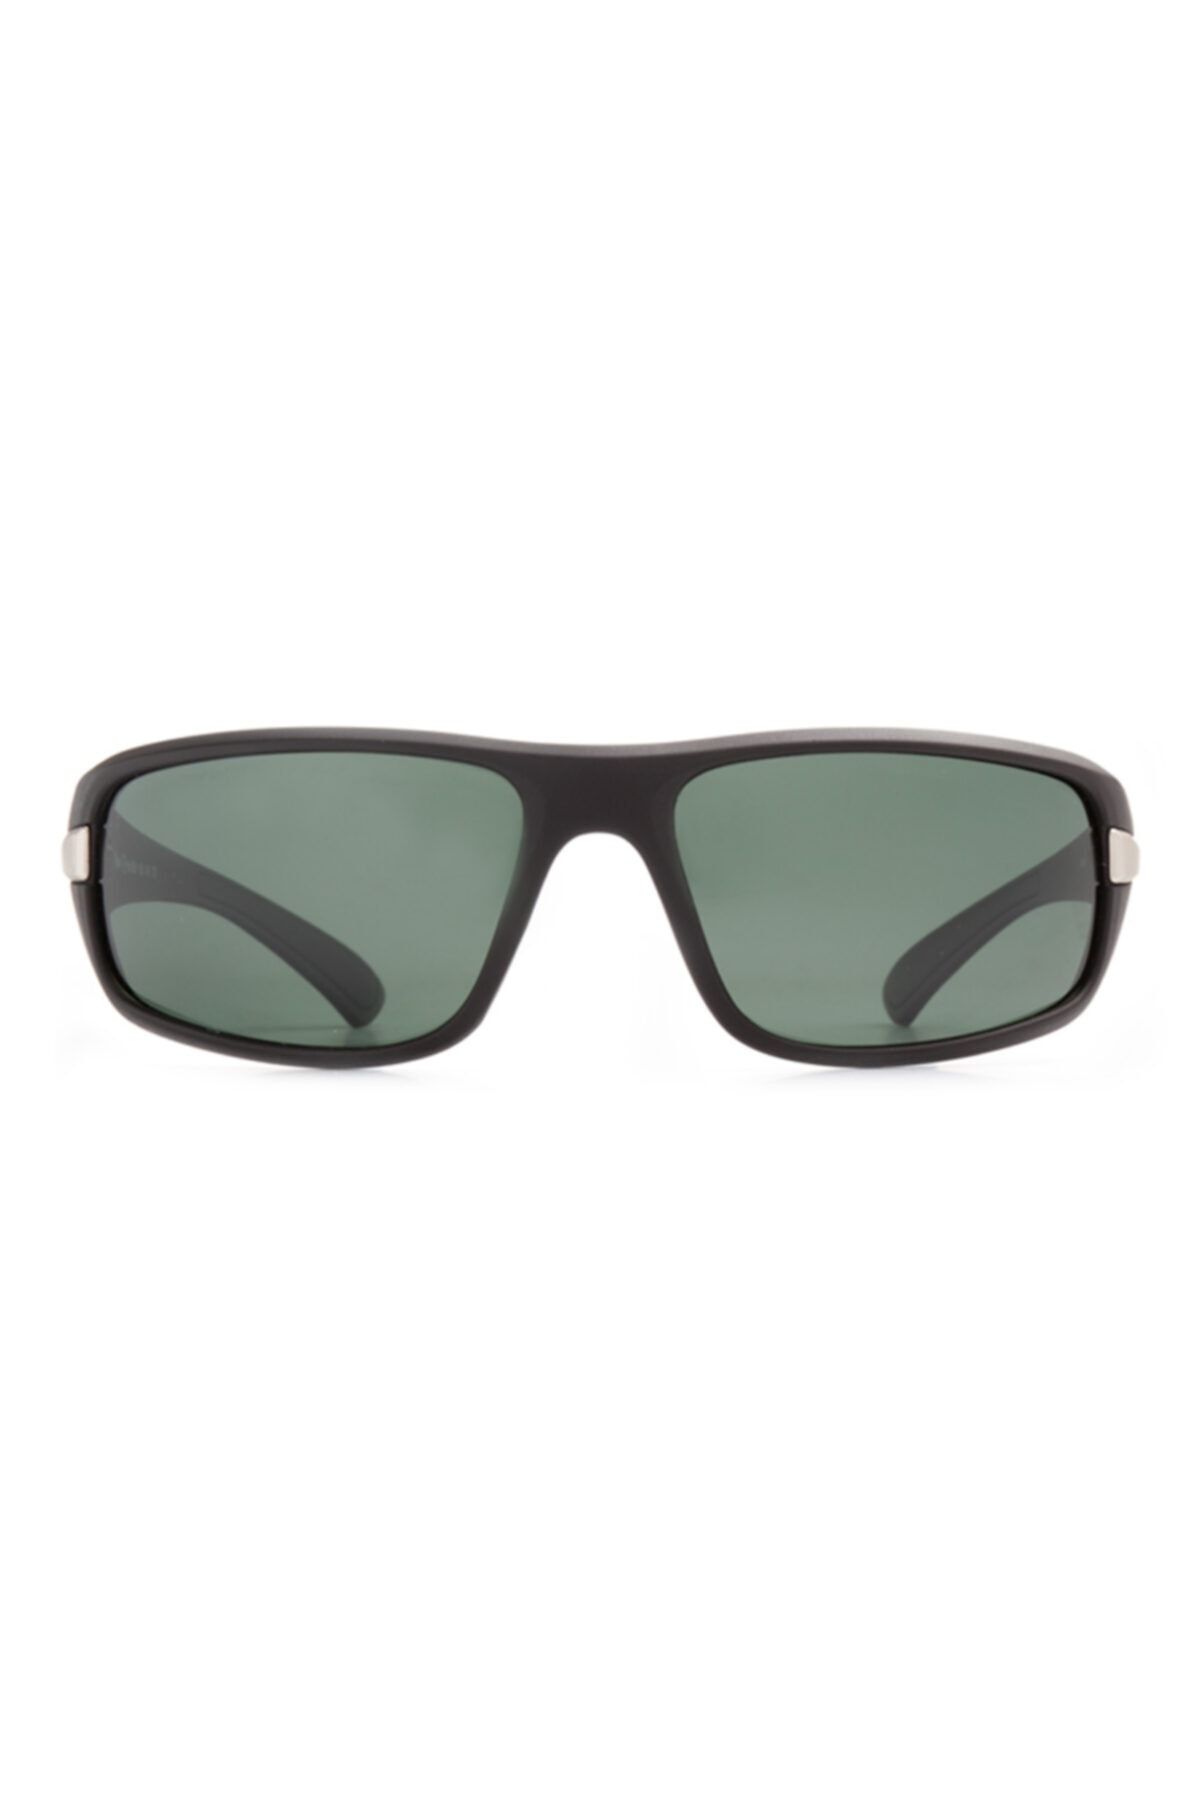 Benx Sunglasses Benx 9001 60*18 Col.m06